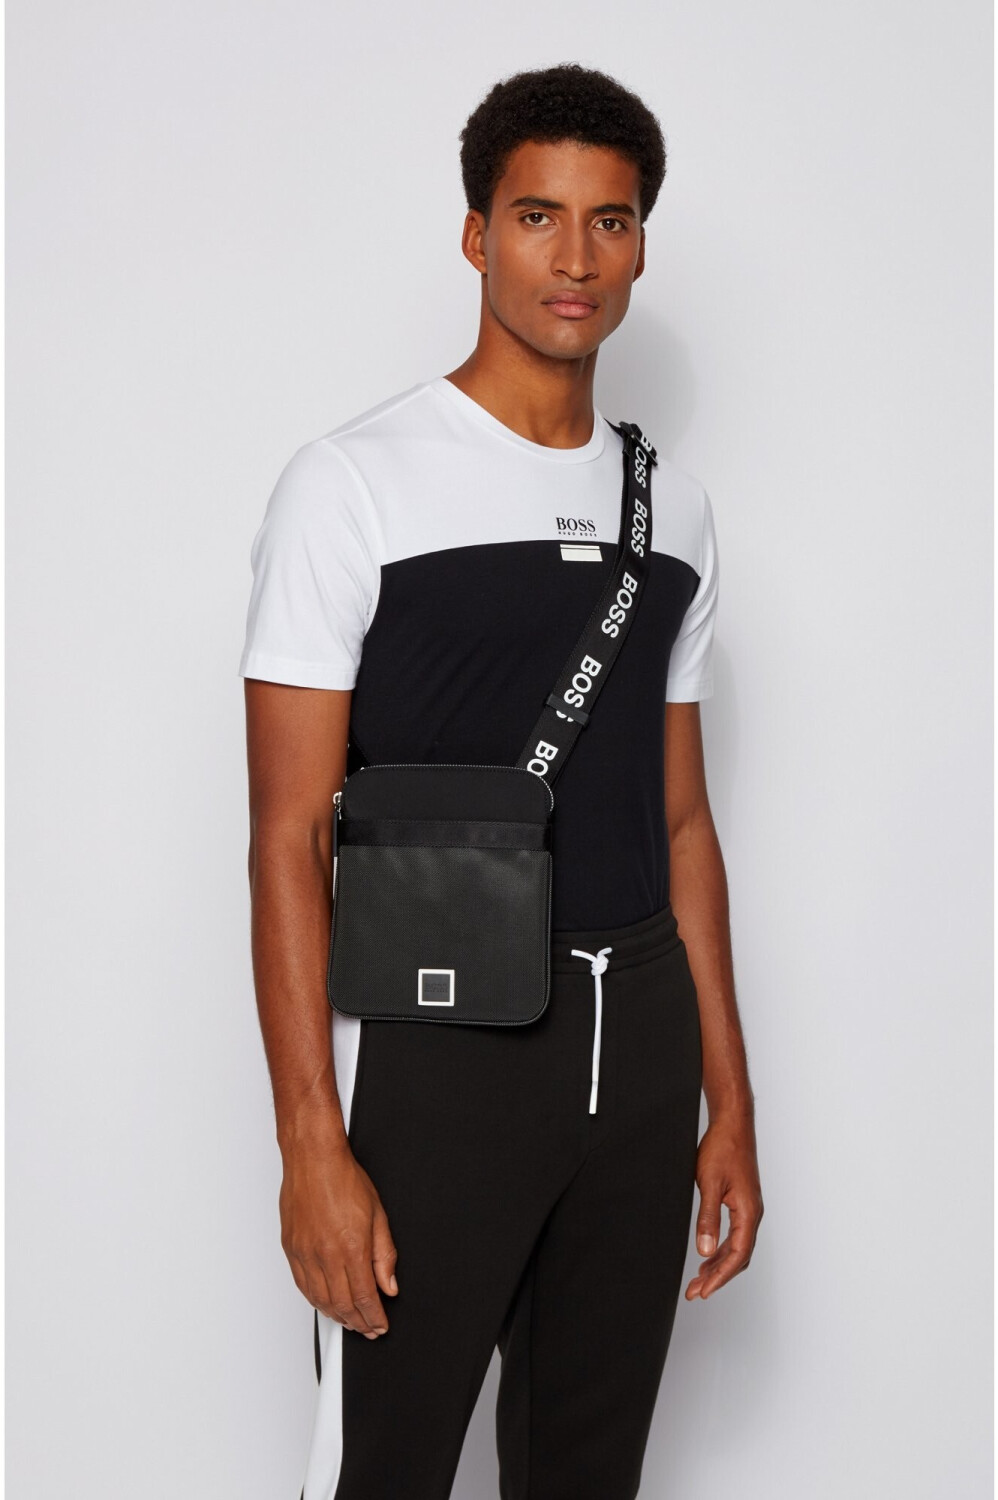 Buy Hugo Boss Bag (50437484) black from £85.00 (Today) – Best Deals on ...